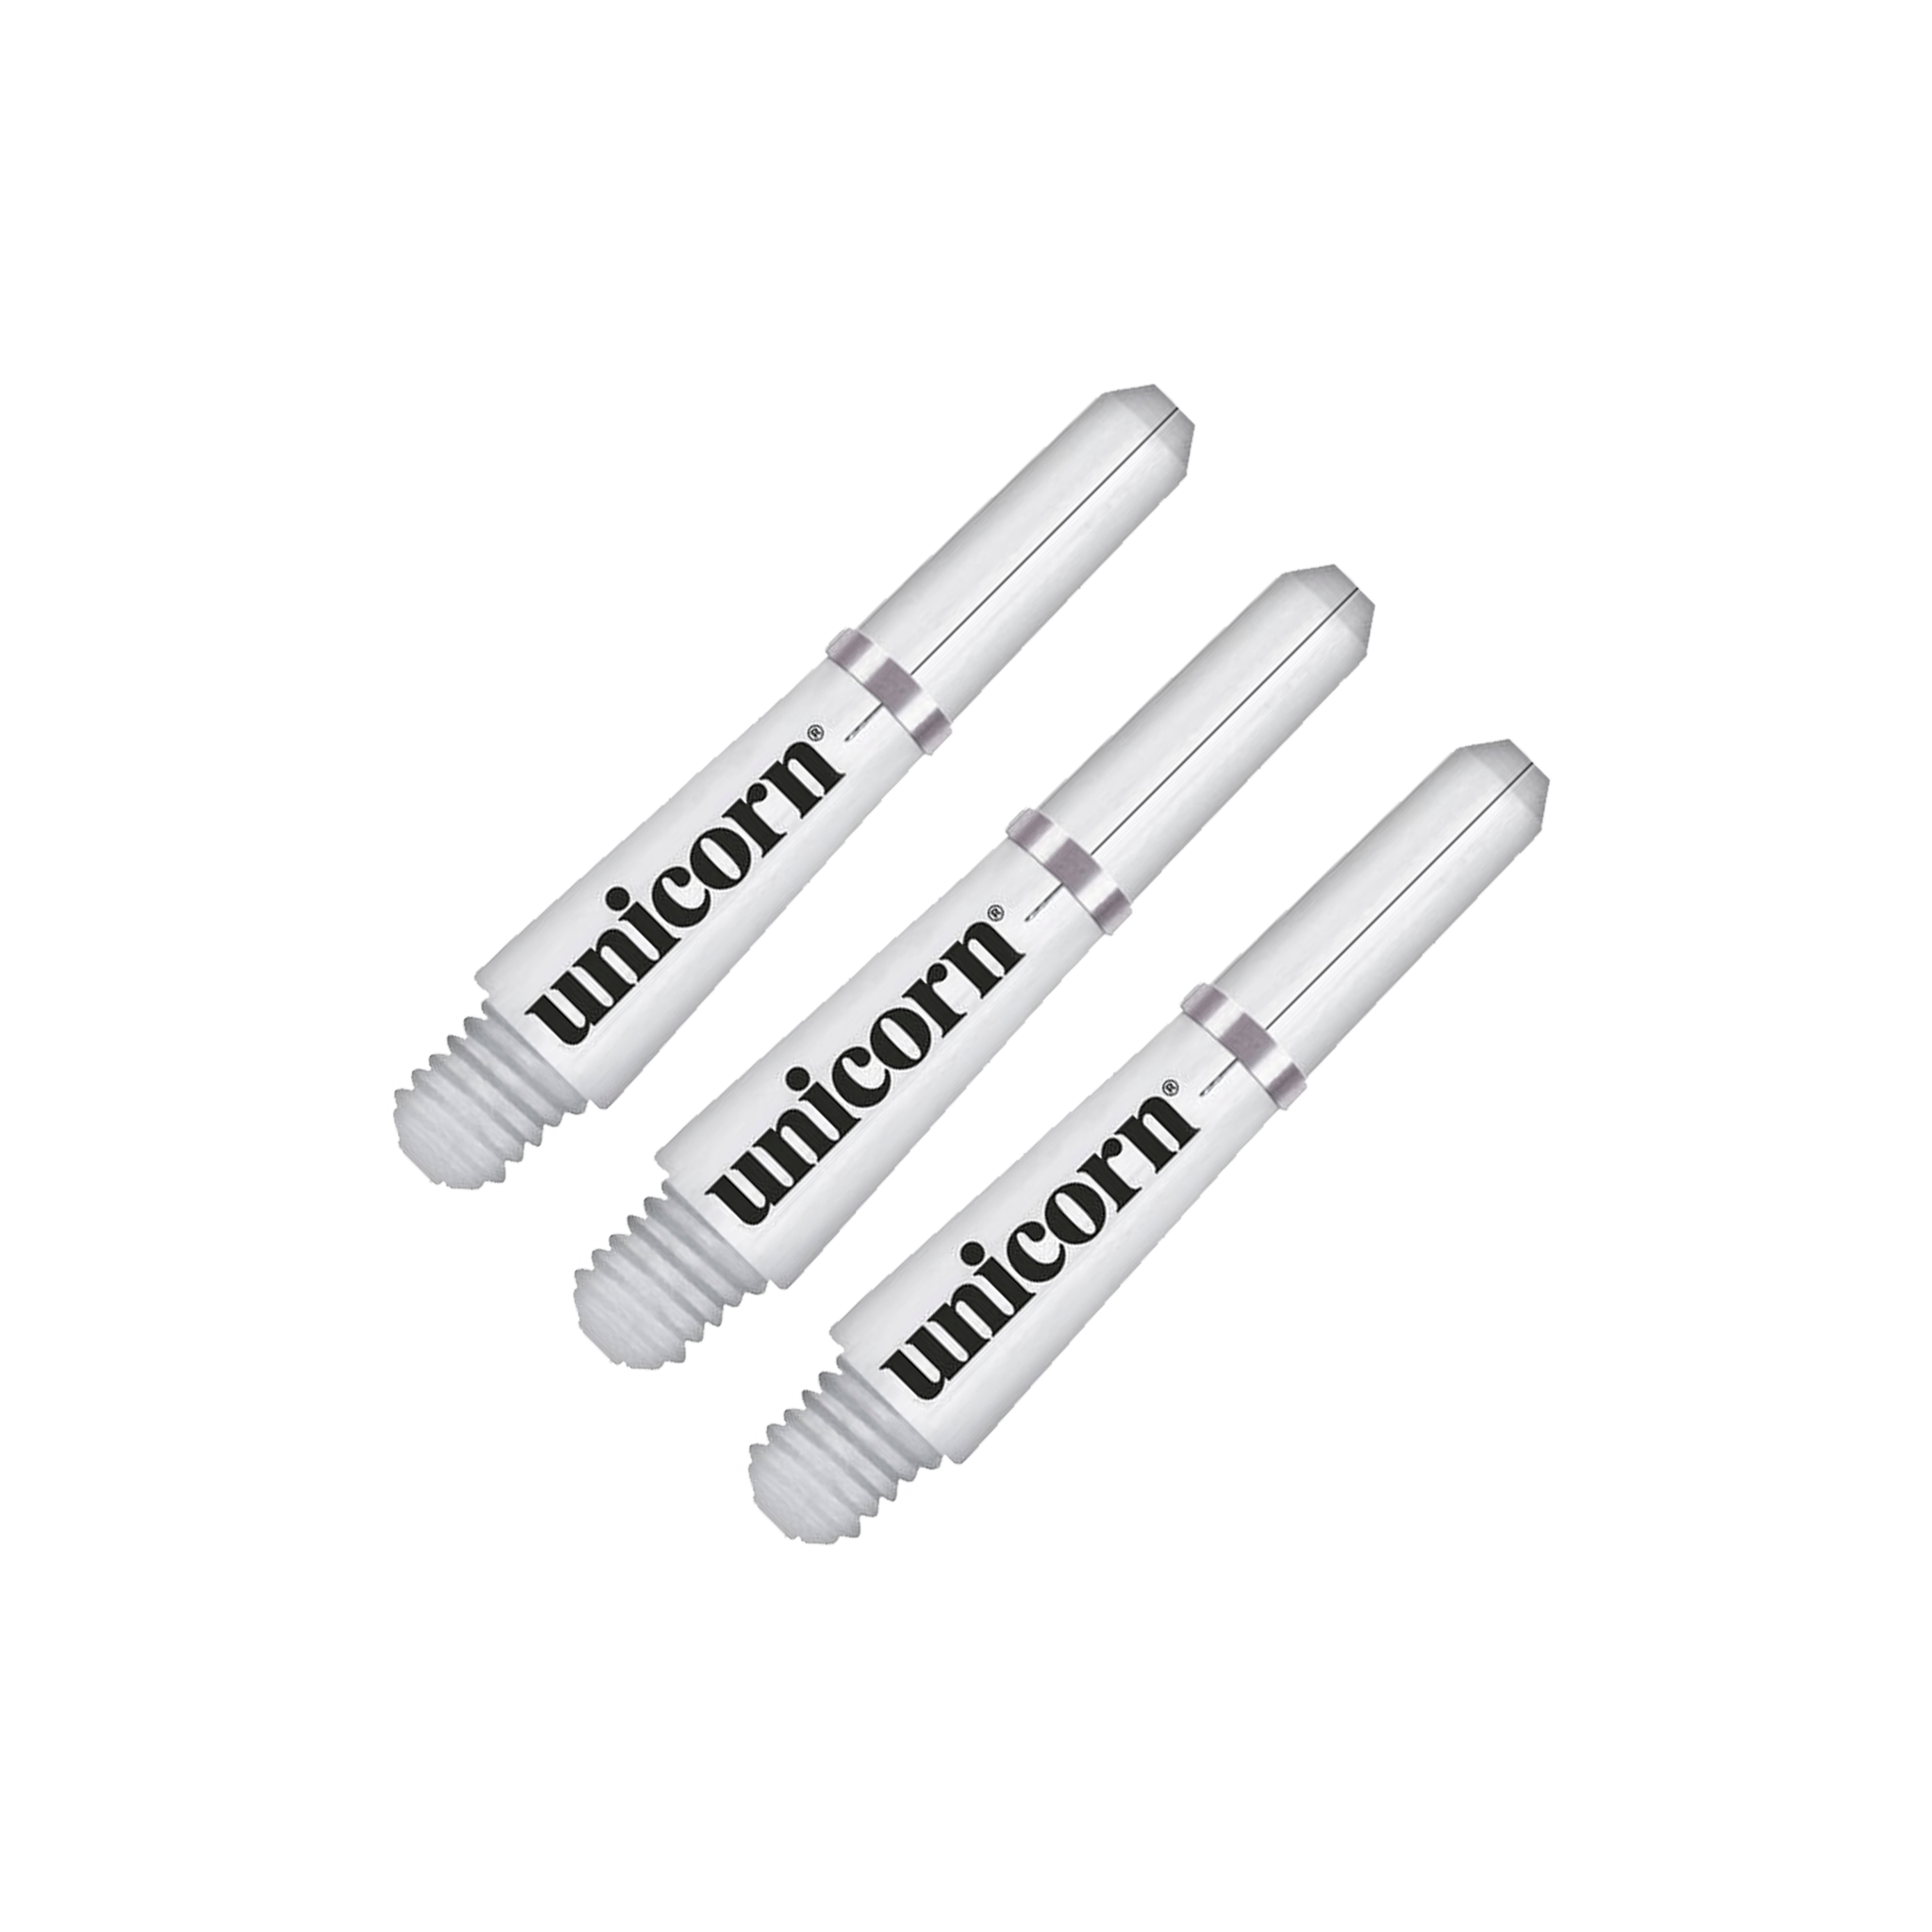 Unicorn Gripper 4 Ultra Short (29mm) Polycarbonate Dart Shafts Clear Shafts